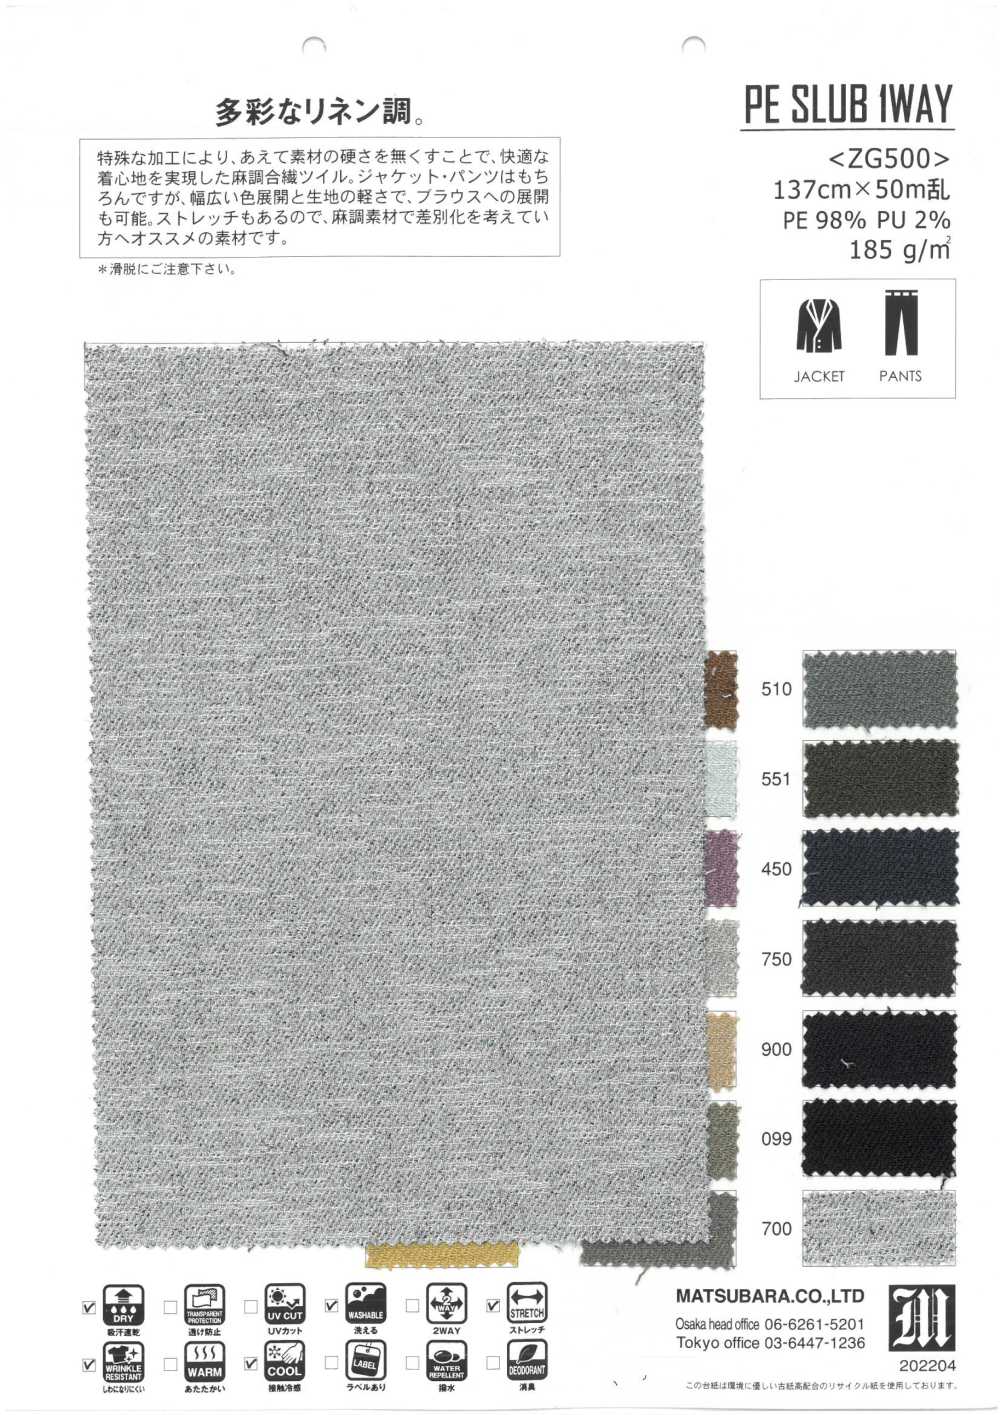 ZG500 PE SLUB 1WAY[Textilgewebe] Matsubara